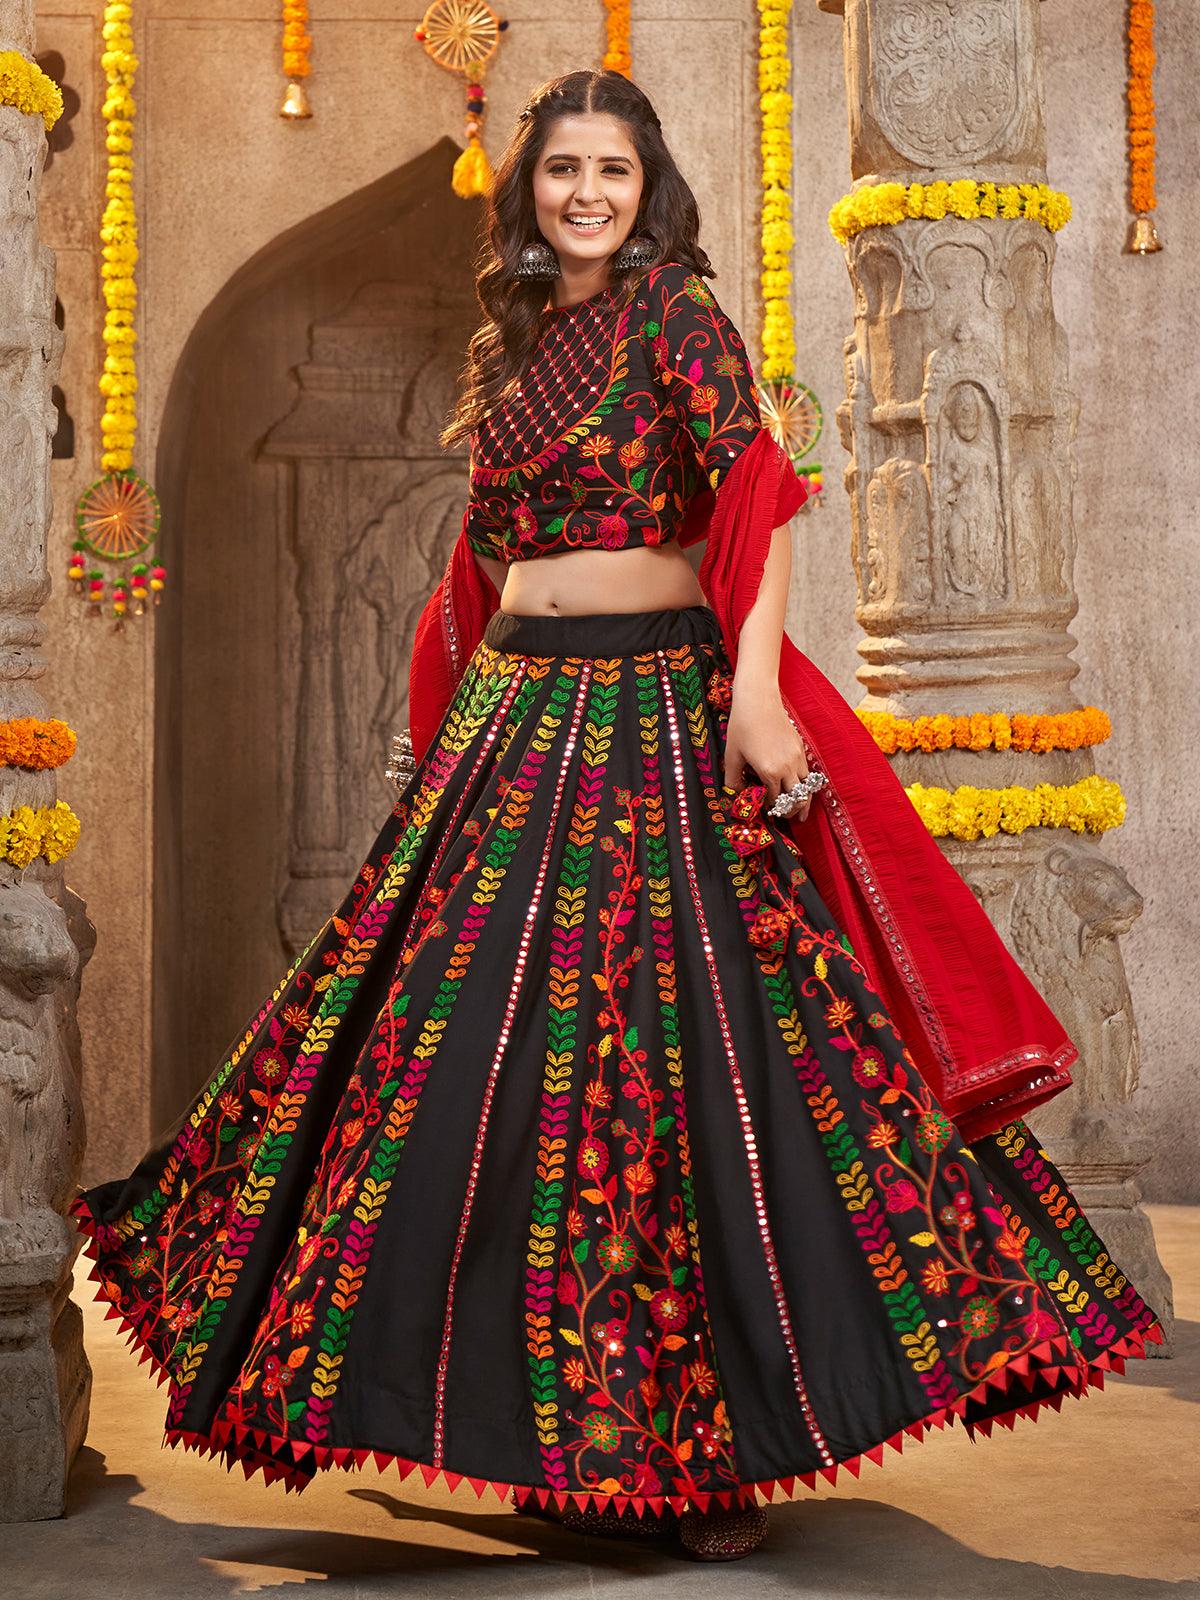 VJVFASHIONS.com - Buy Now @ http://bit.ly/VJV-HITA10008 Fantastic Maroon  Color Velvet Designer Lehenga Choli Fabric- Velvet Product No 👉 VJV-HITA10008  @ www.vjvfashions.com #chaniyacholi #ghagracholi #indianwear #indianwedding  #fashion #fashions ...